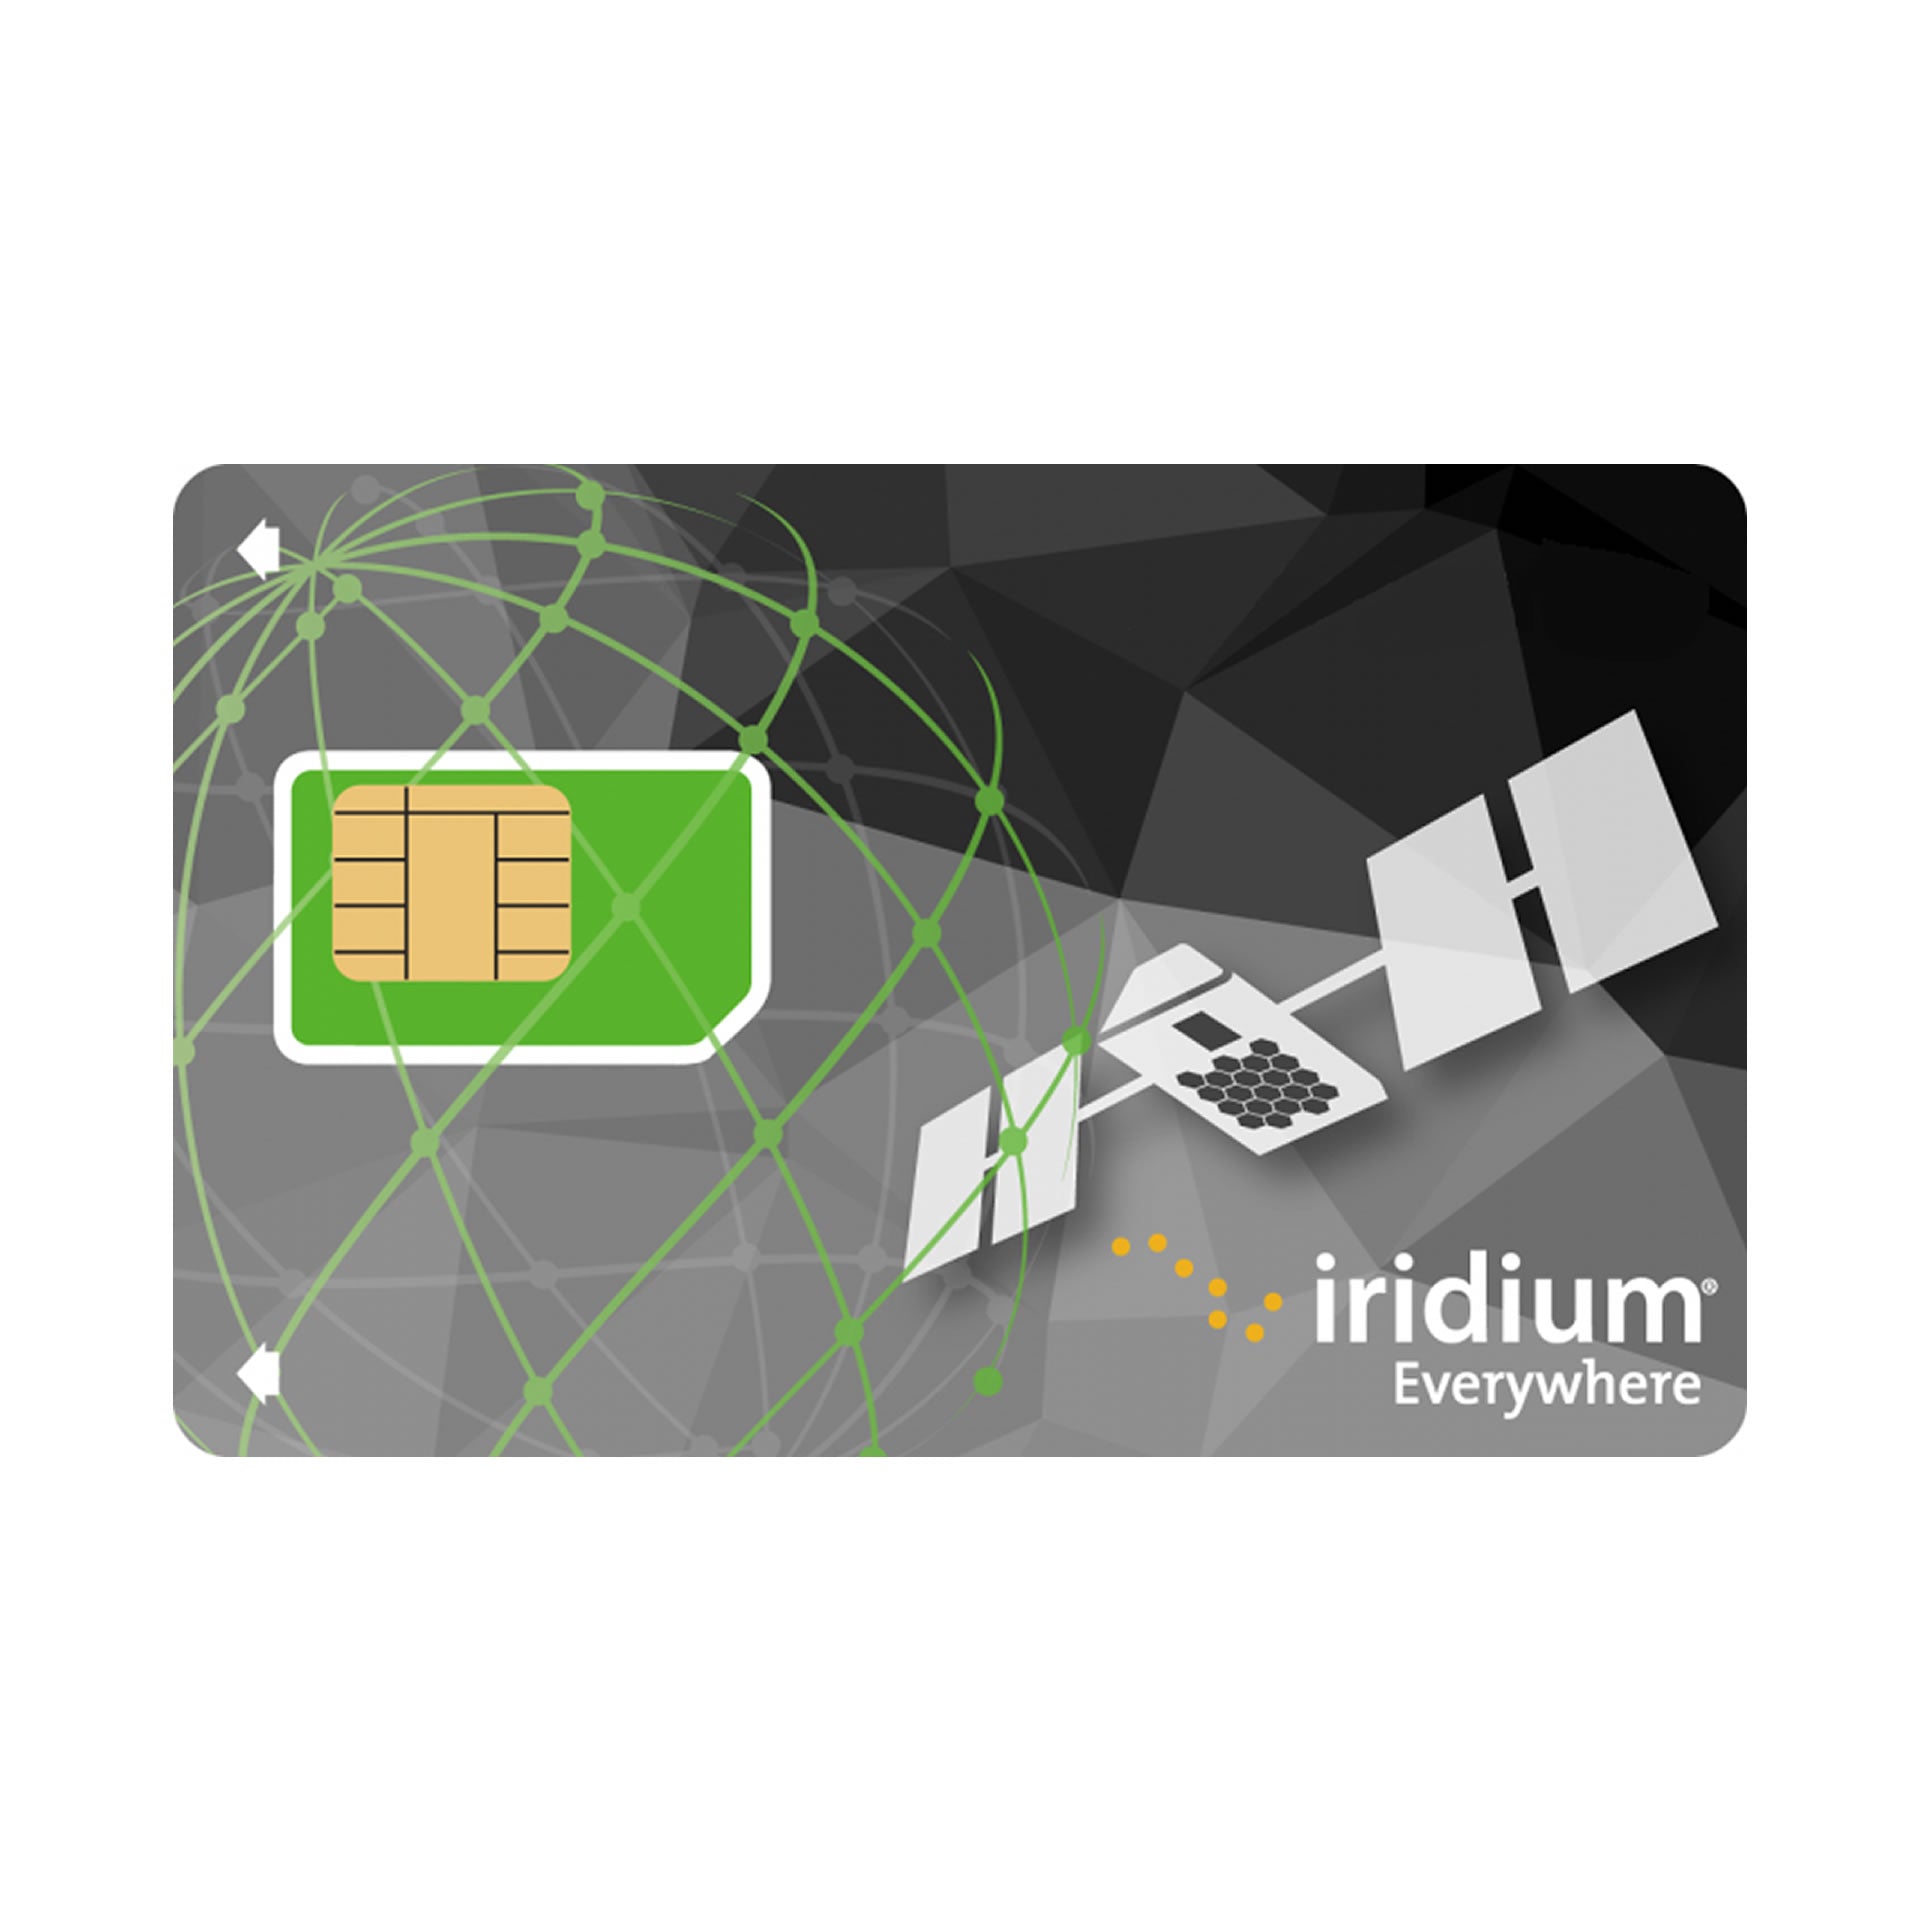 Tarjeta prepago Iridium GO 1000 minutos DATA 12 meses